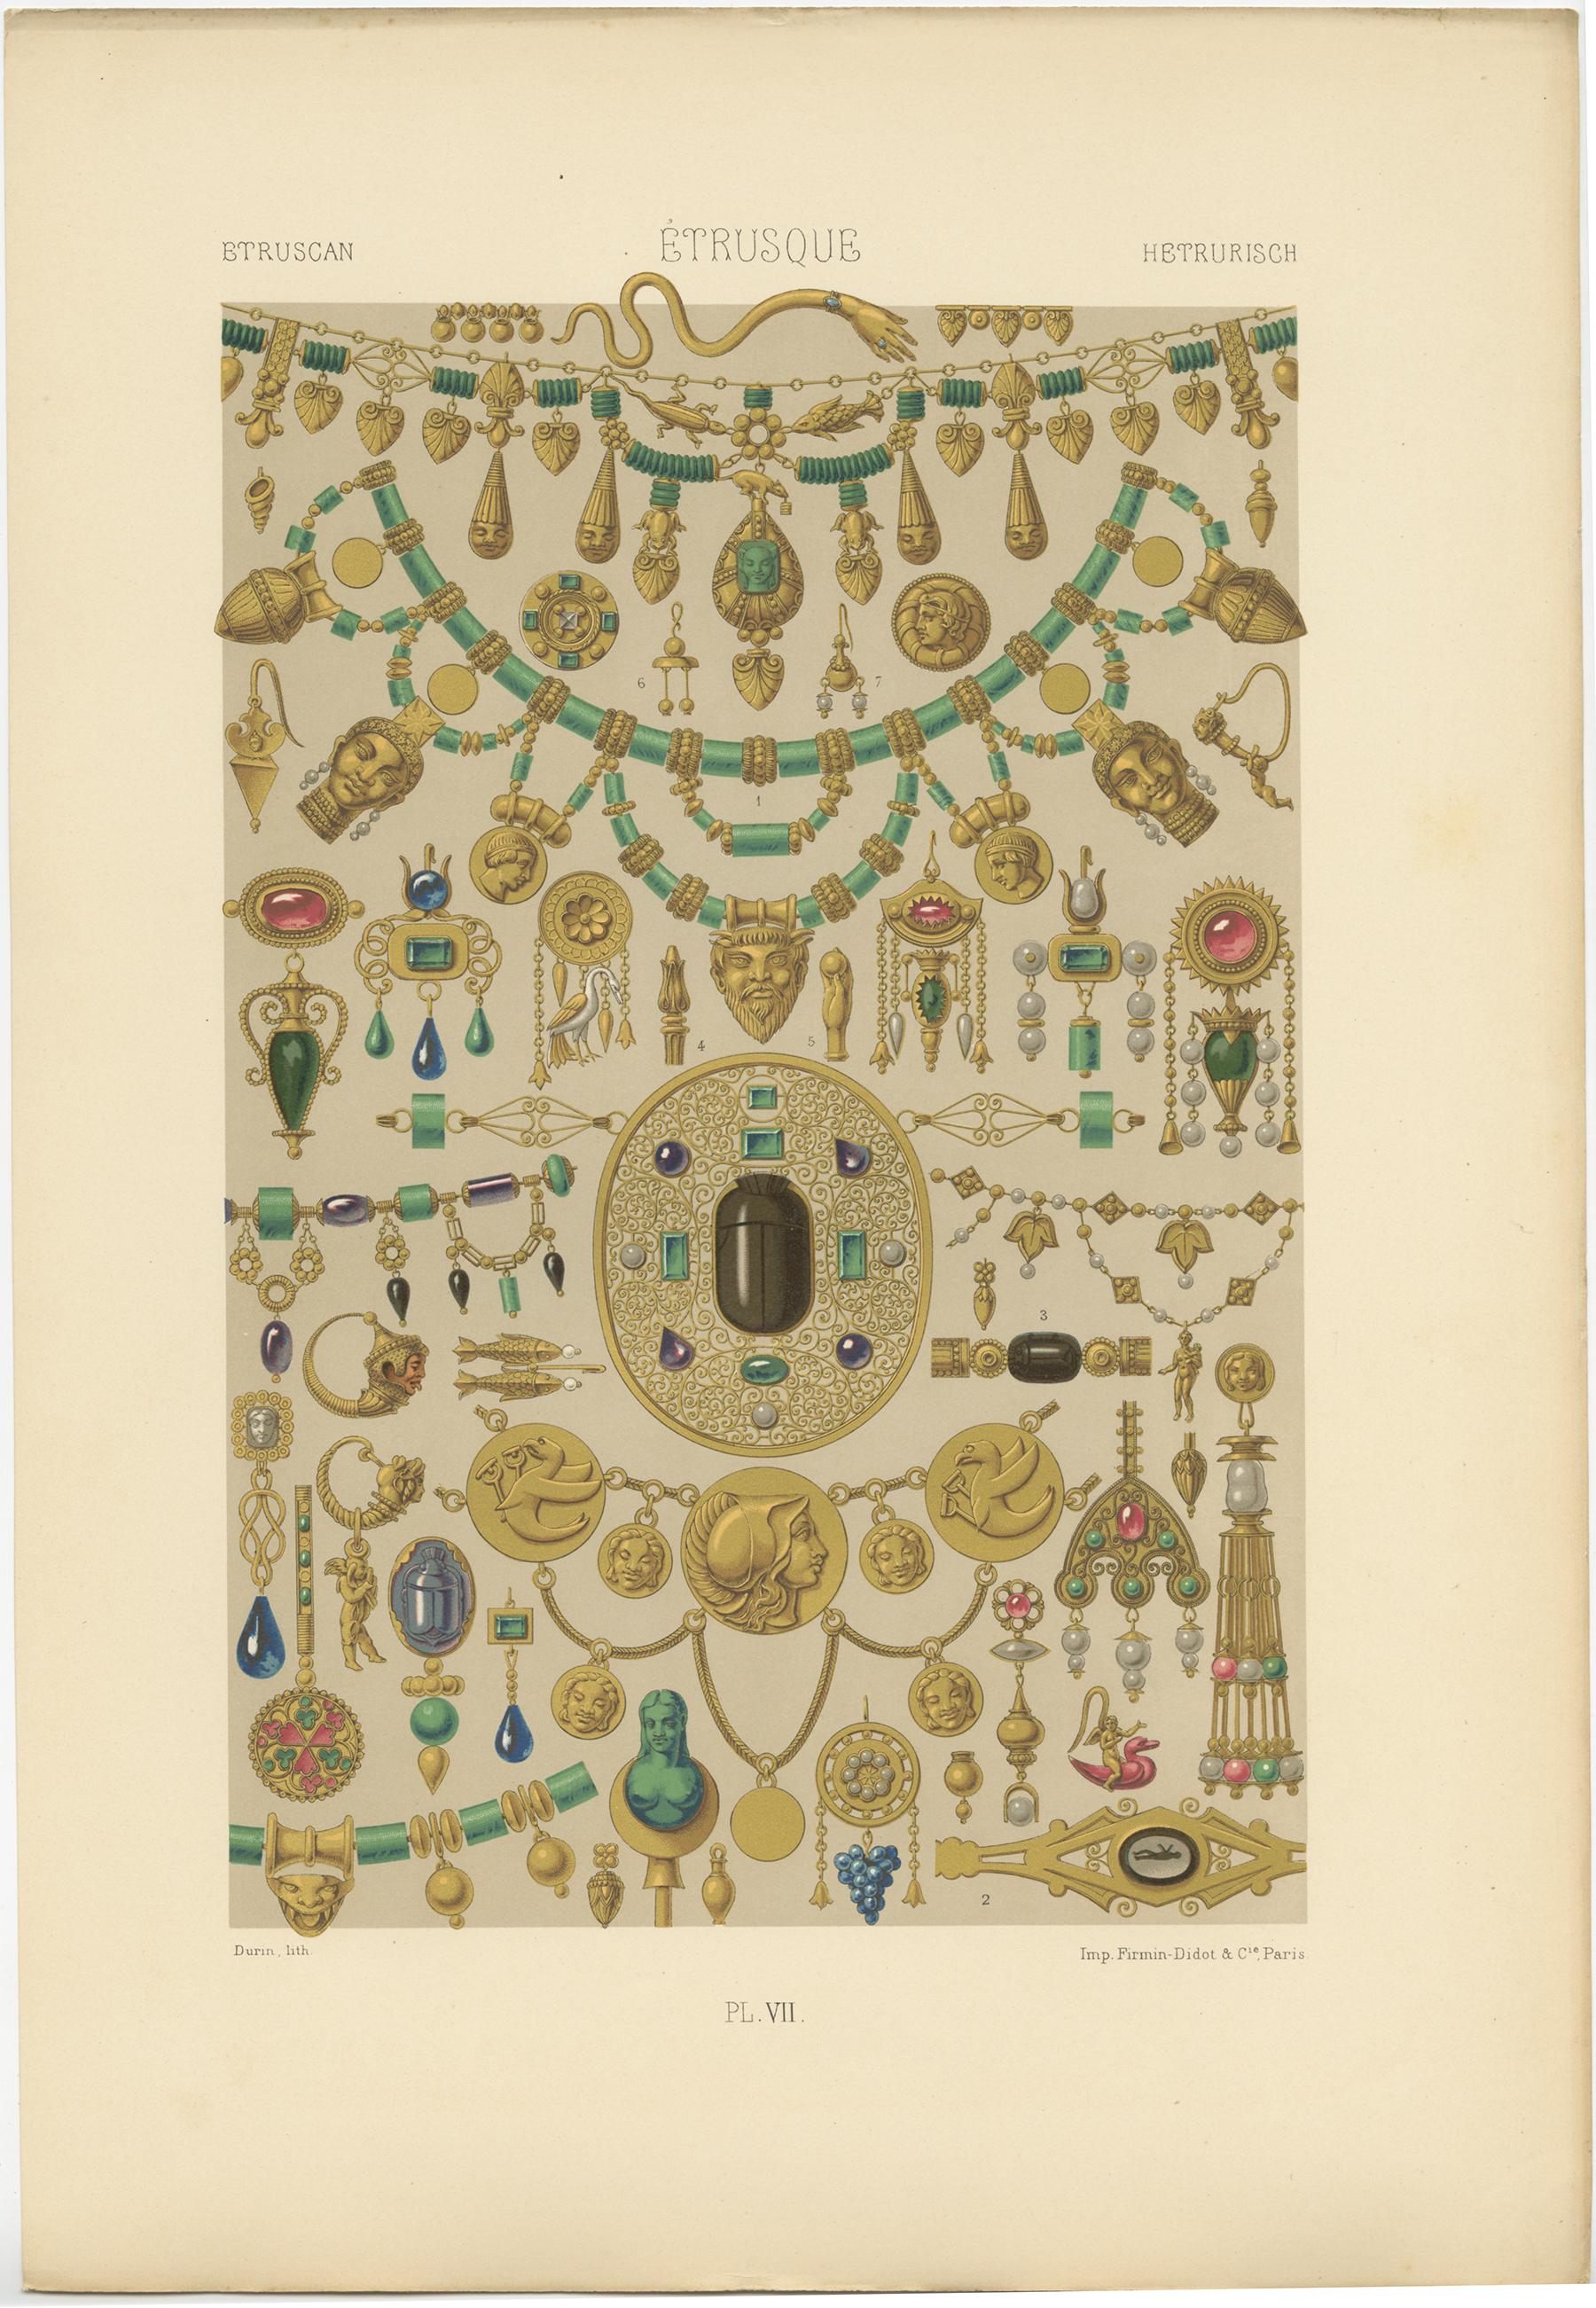 Antique print titled 'Etruscan - Étrusque - Hetrurisch'. Chromolithograph of Etruscan ornaments and decorative arts. This print originates from 'l'Ornement Polychrome' by Auguste Racinet. Published, circa 1890.